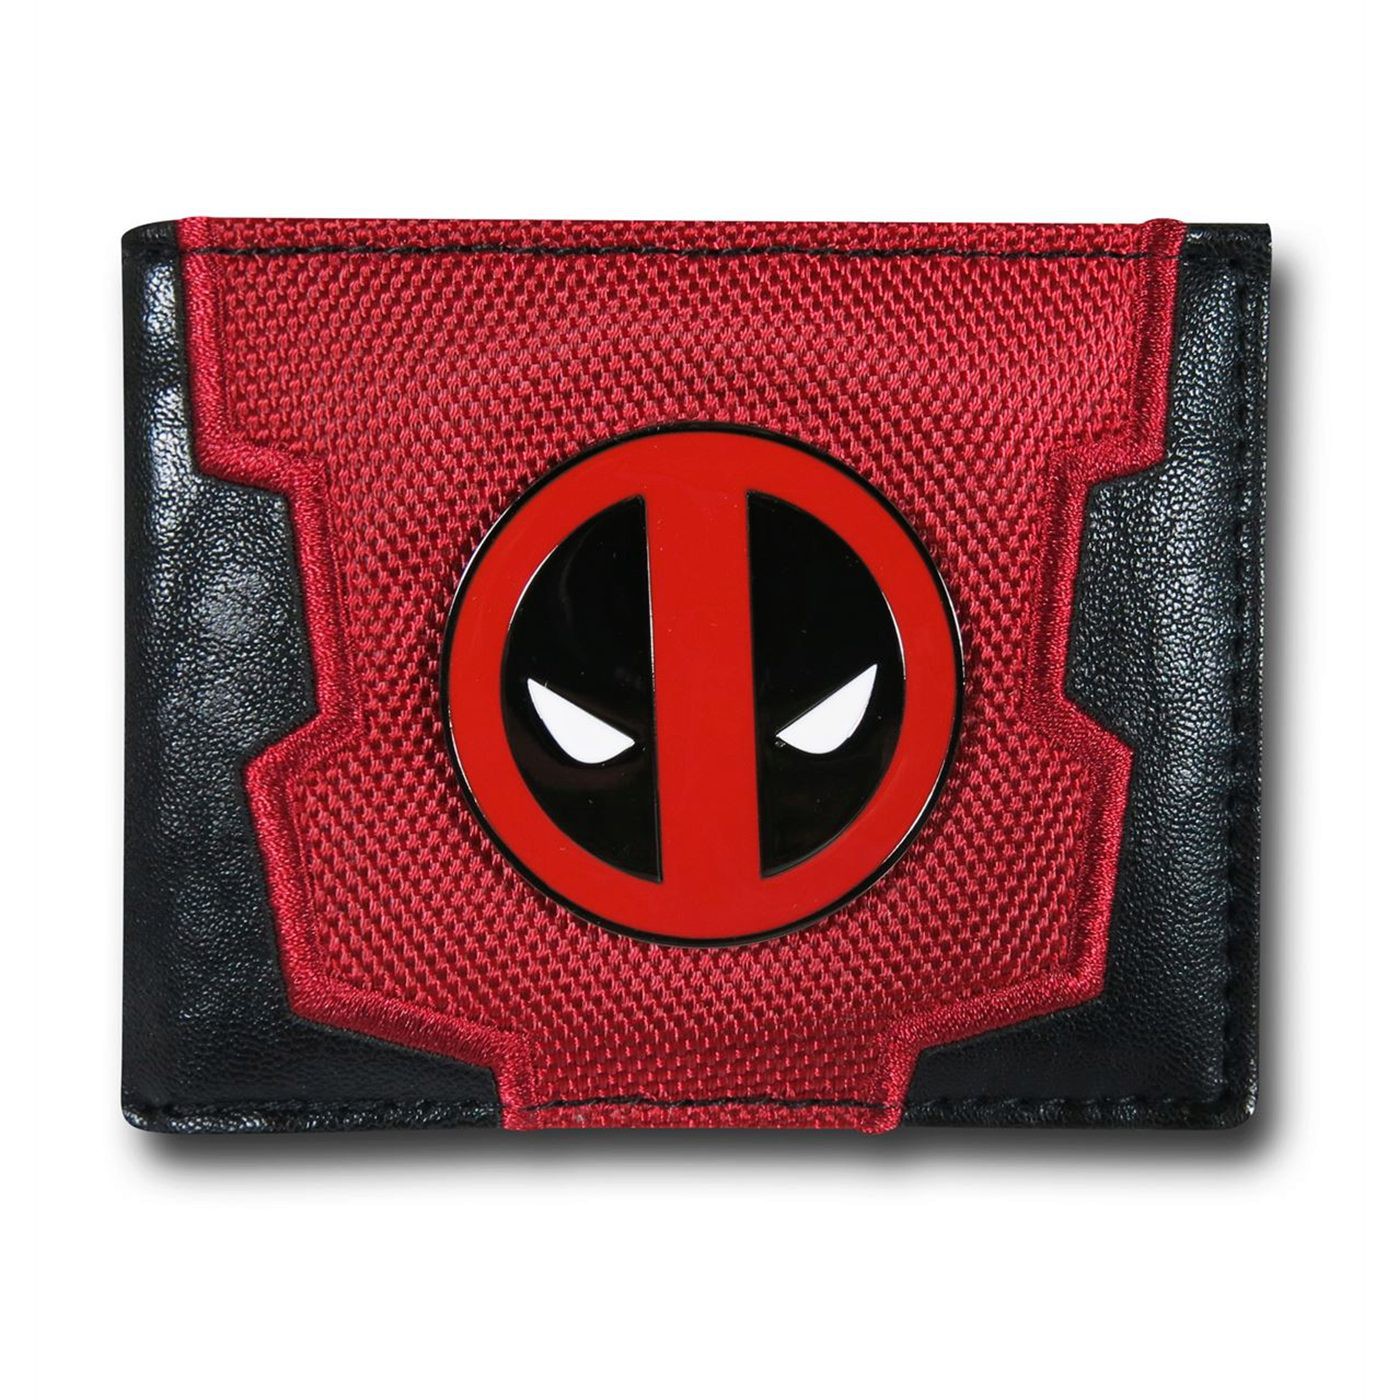 Deadpool Suit-Up Men's Bi-Fold Wallet